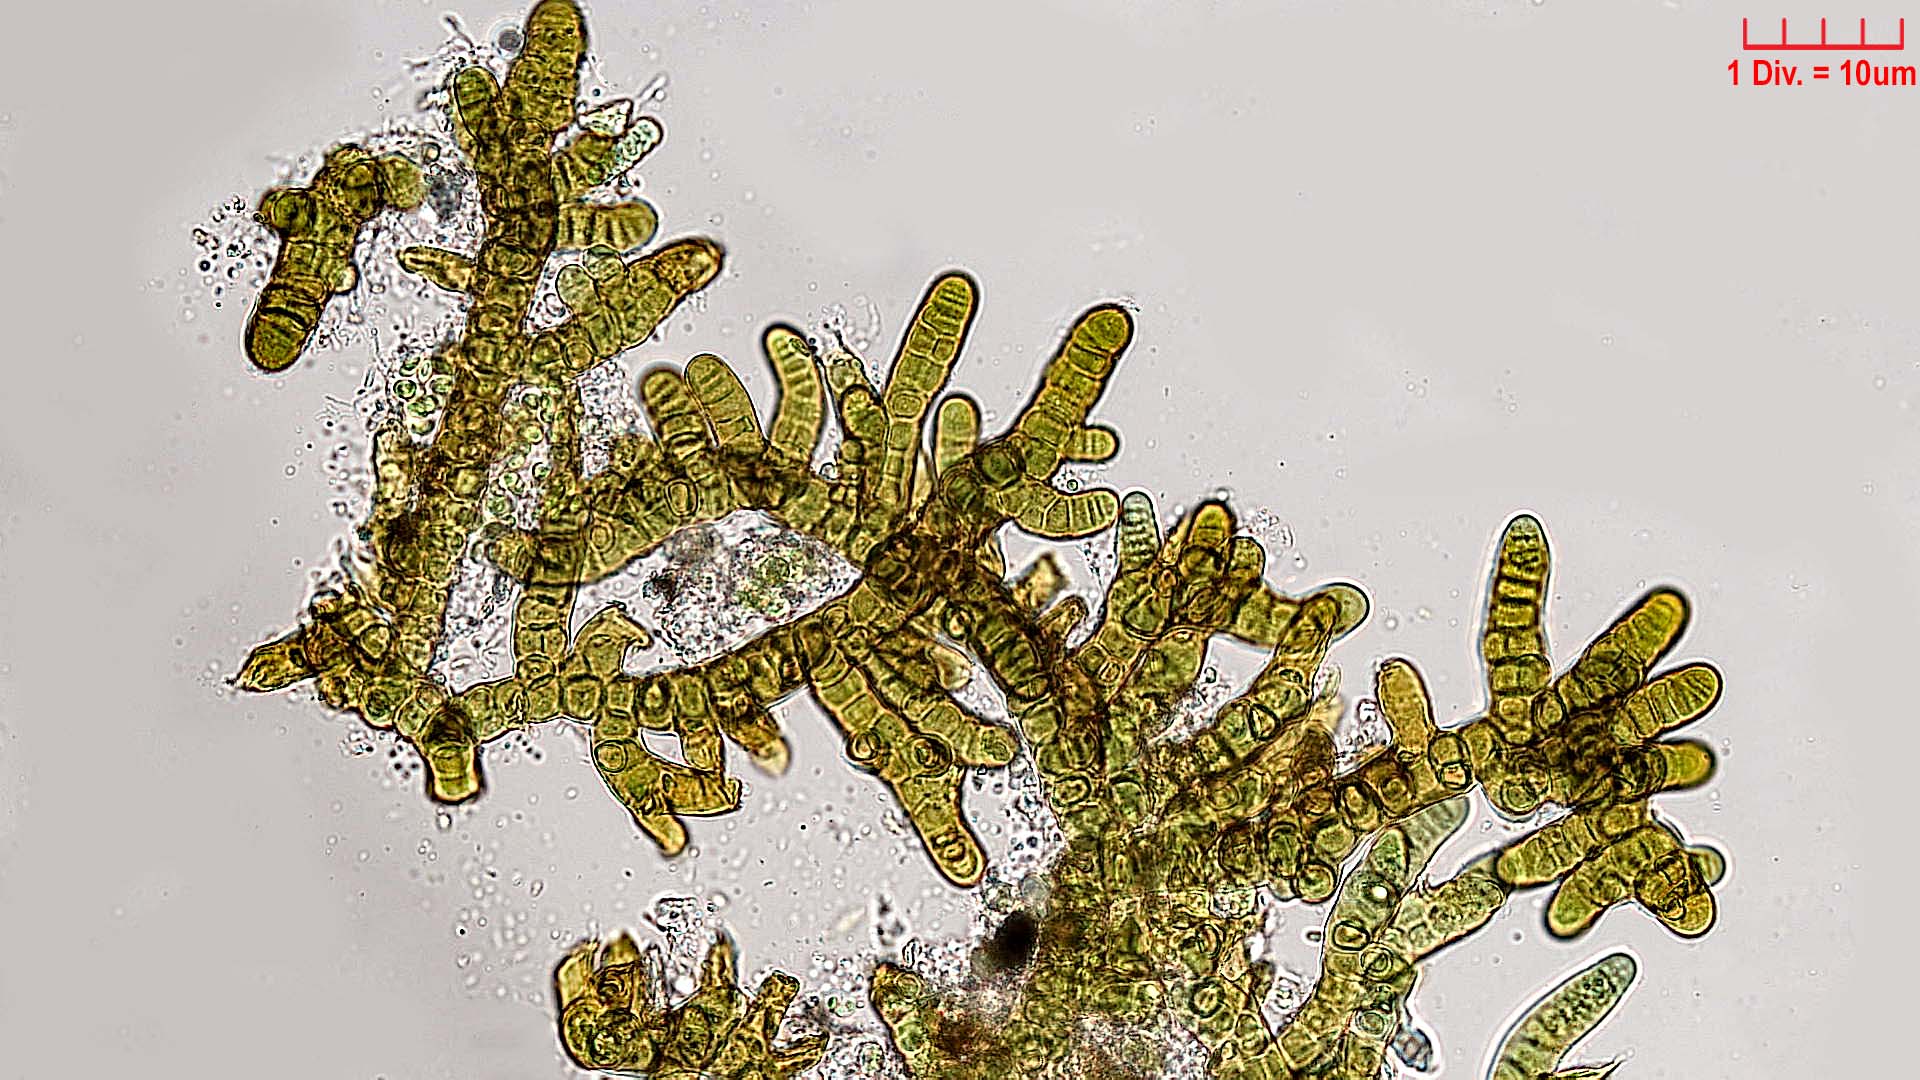 ././Cyanobacteria/Nostocales/Stigonemataceae/Stigonema/minutum/stigonema-minutum-533.jpg